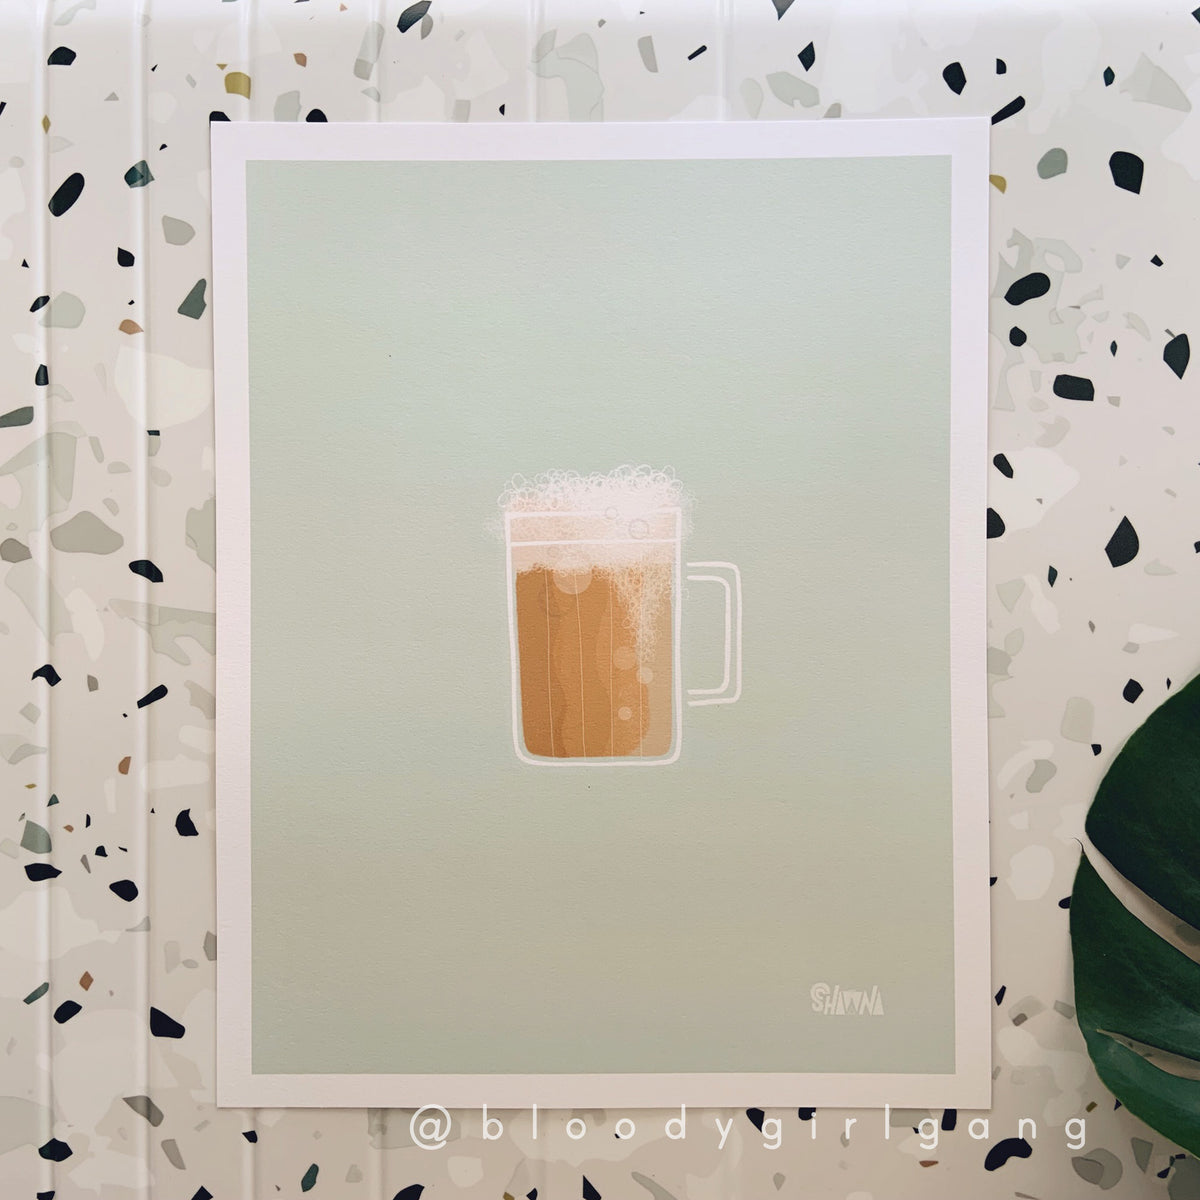 Icy Cold Beer Art Print